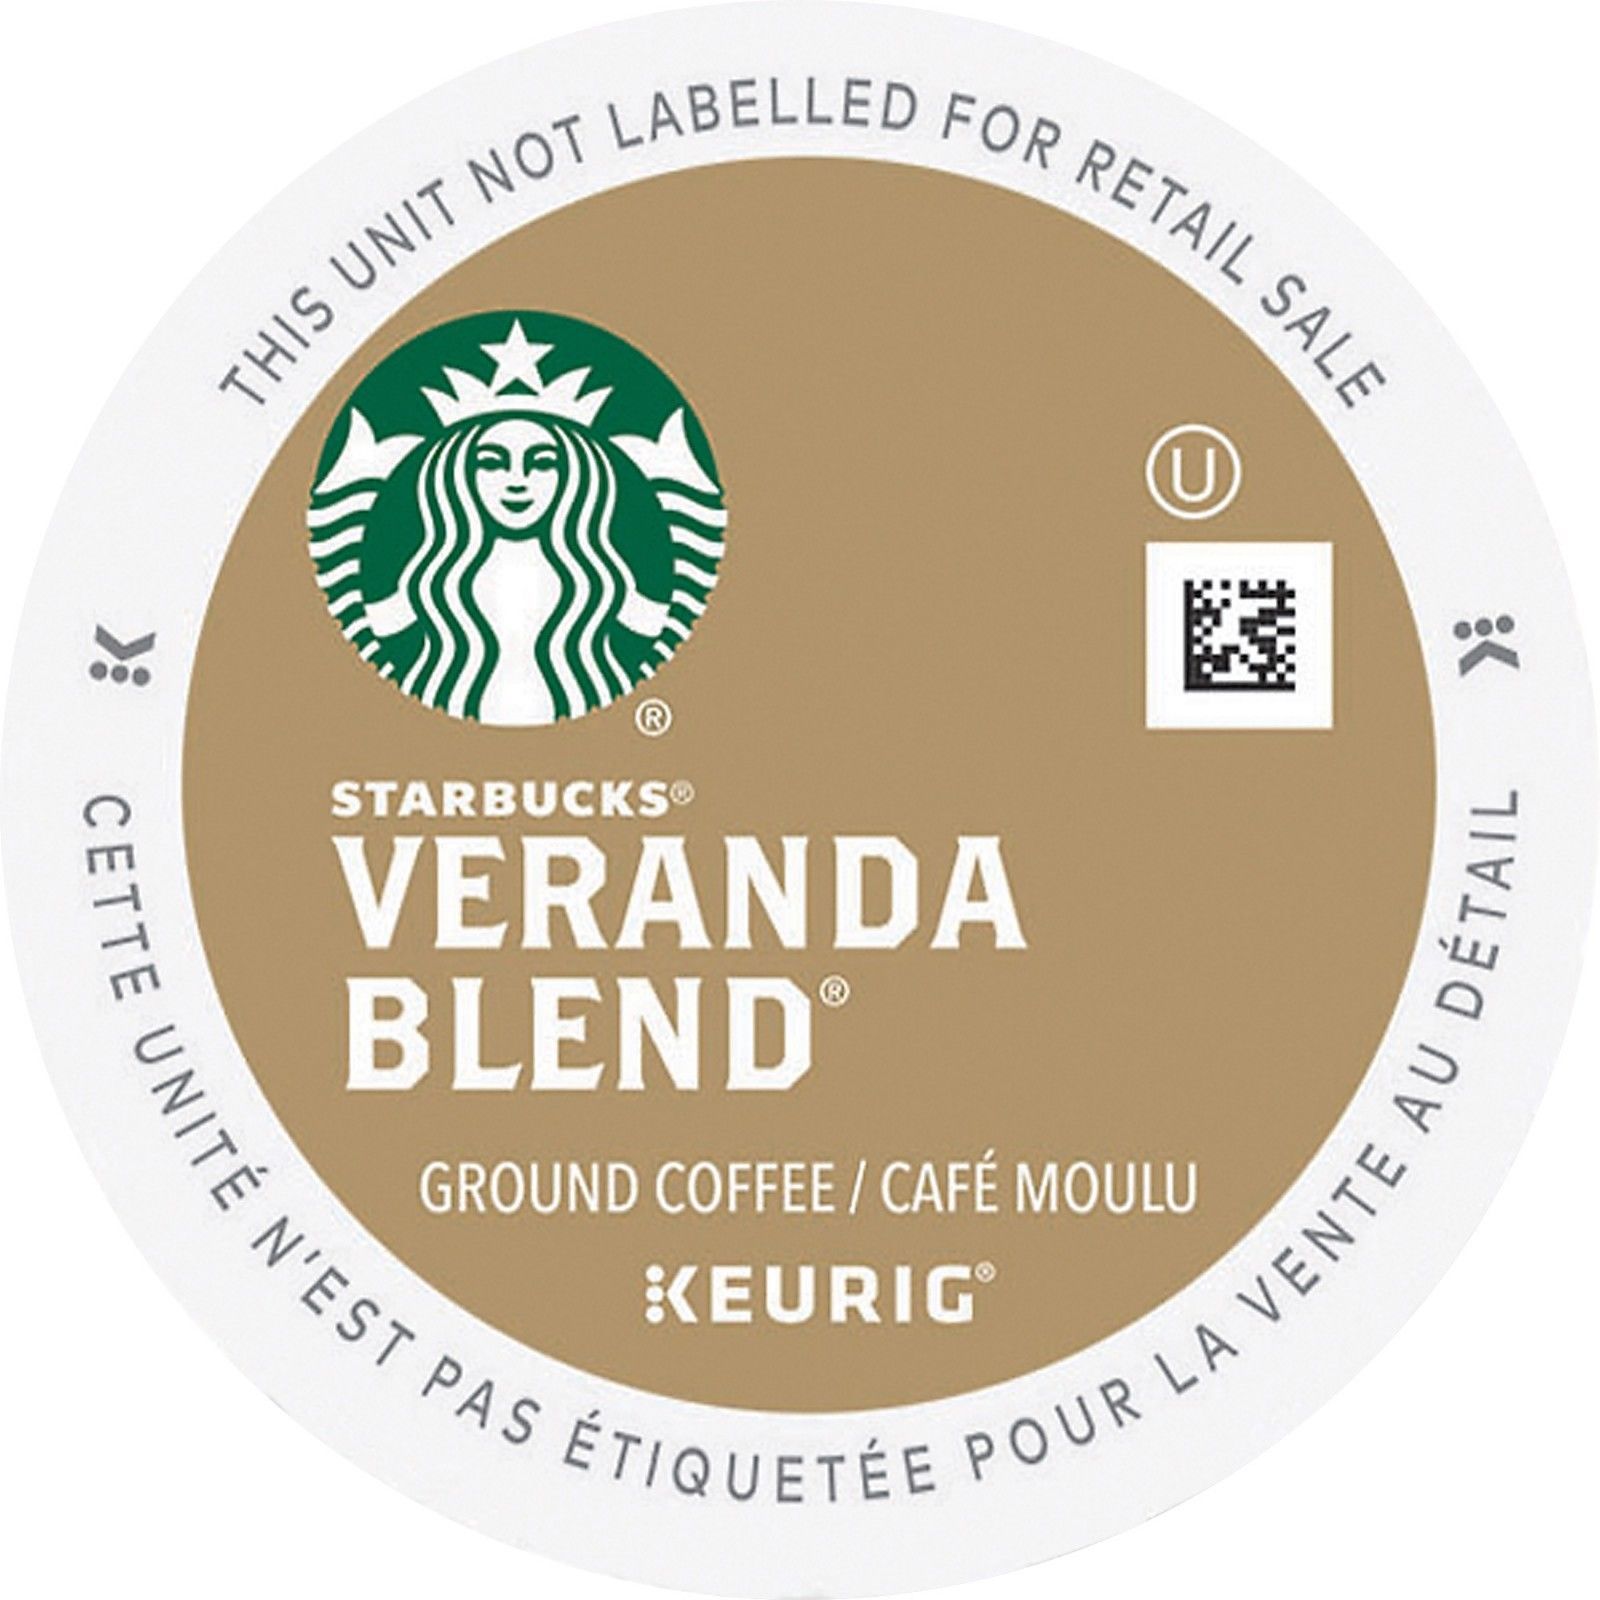 Starbucks Veranda Blend Coffee 22 to 132 Keurig K cups Pick Any Size FREE SHIP - $24.99 - $113.99